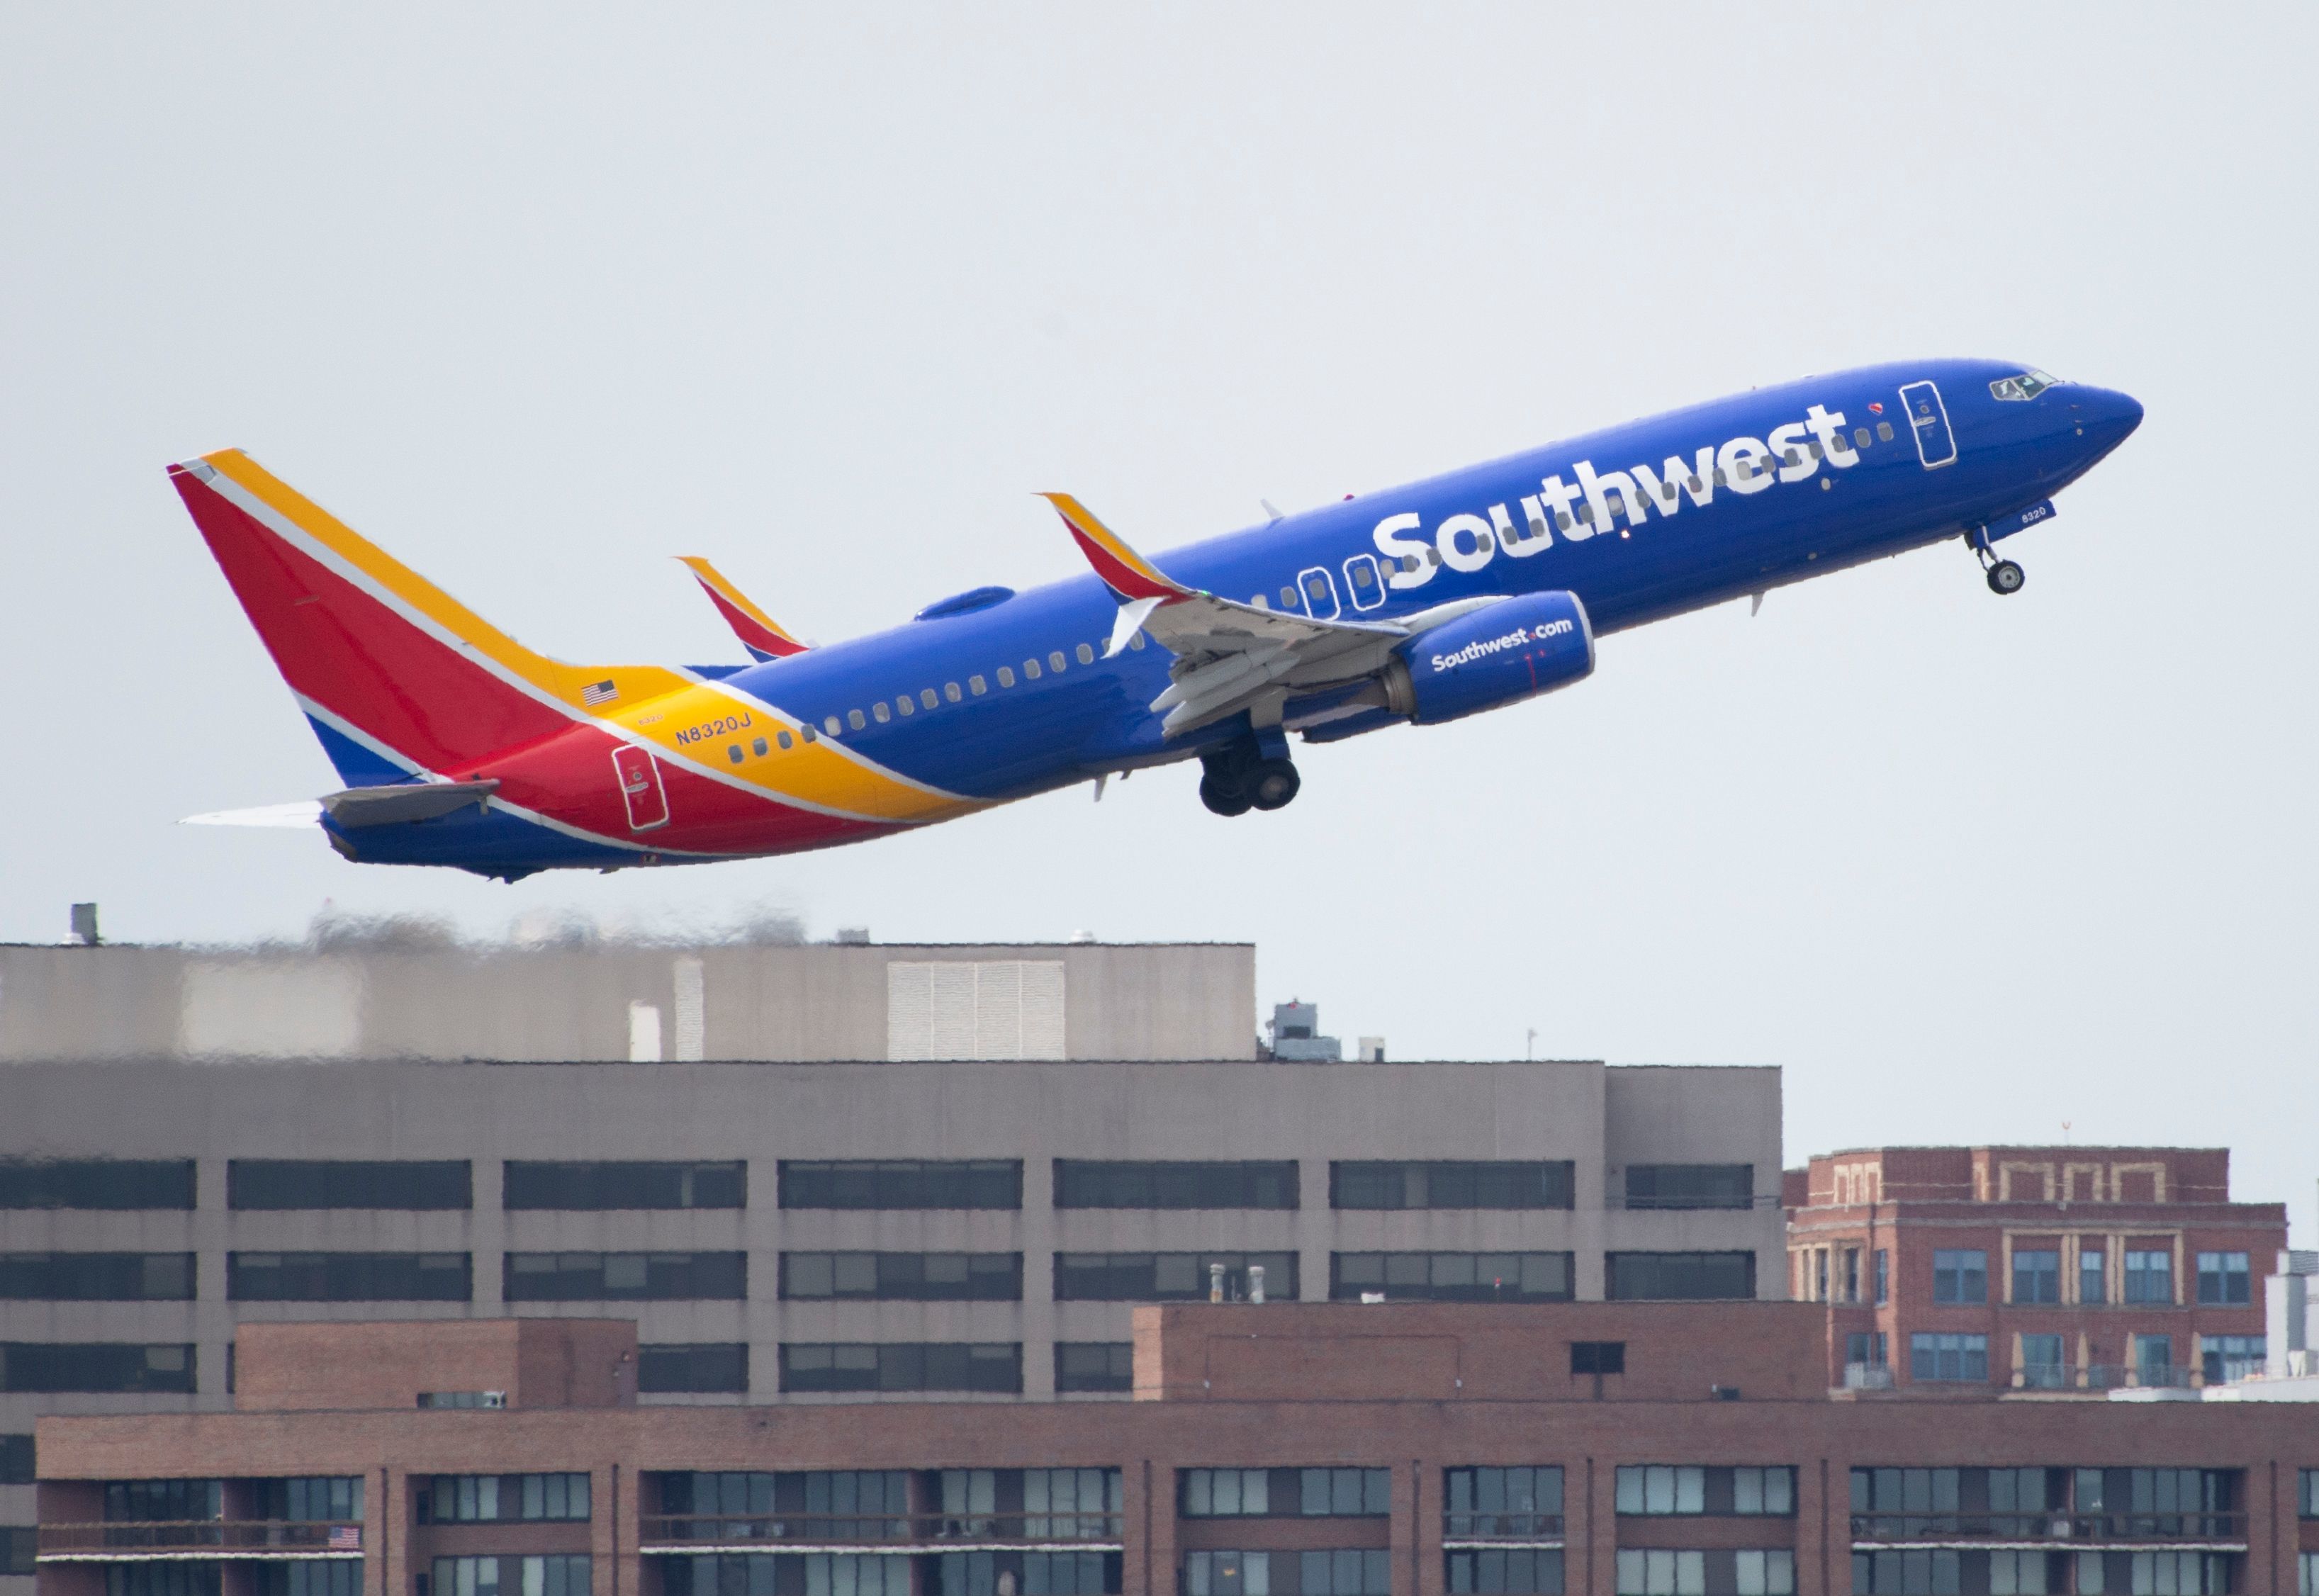 Southwest Airlines pulls Boeing 737 Max off flight schedule until October